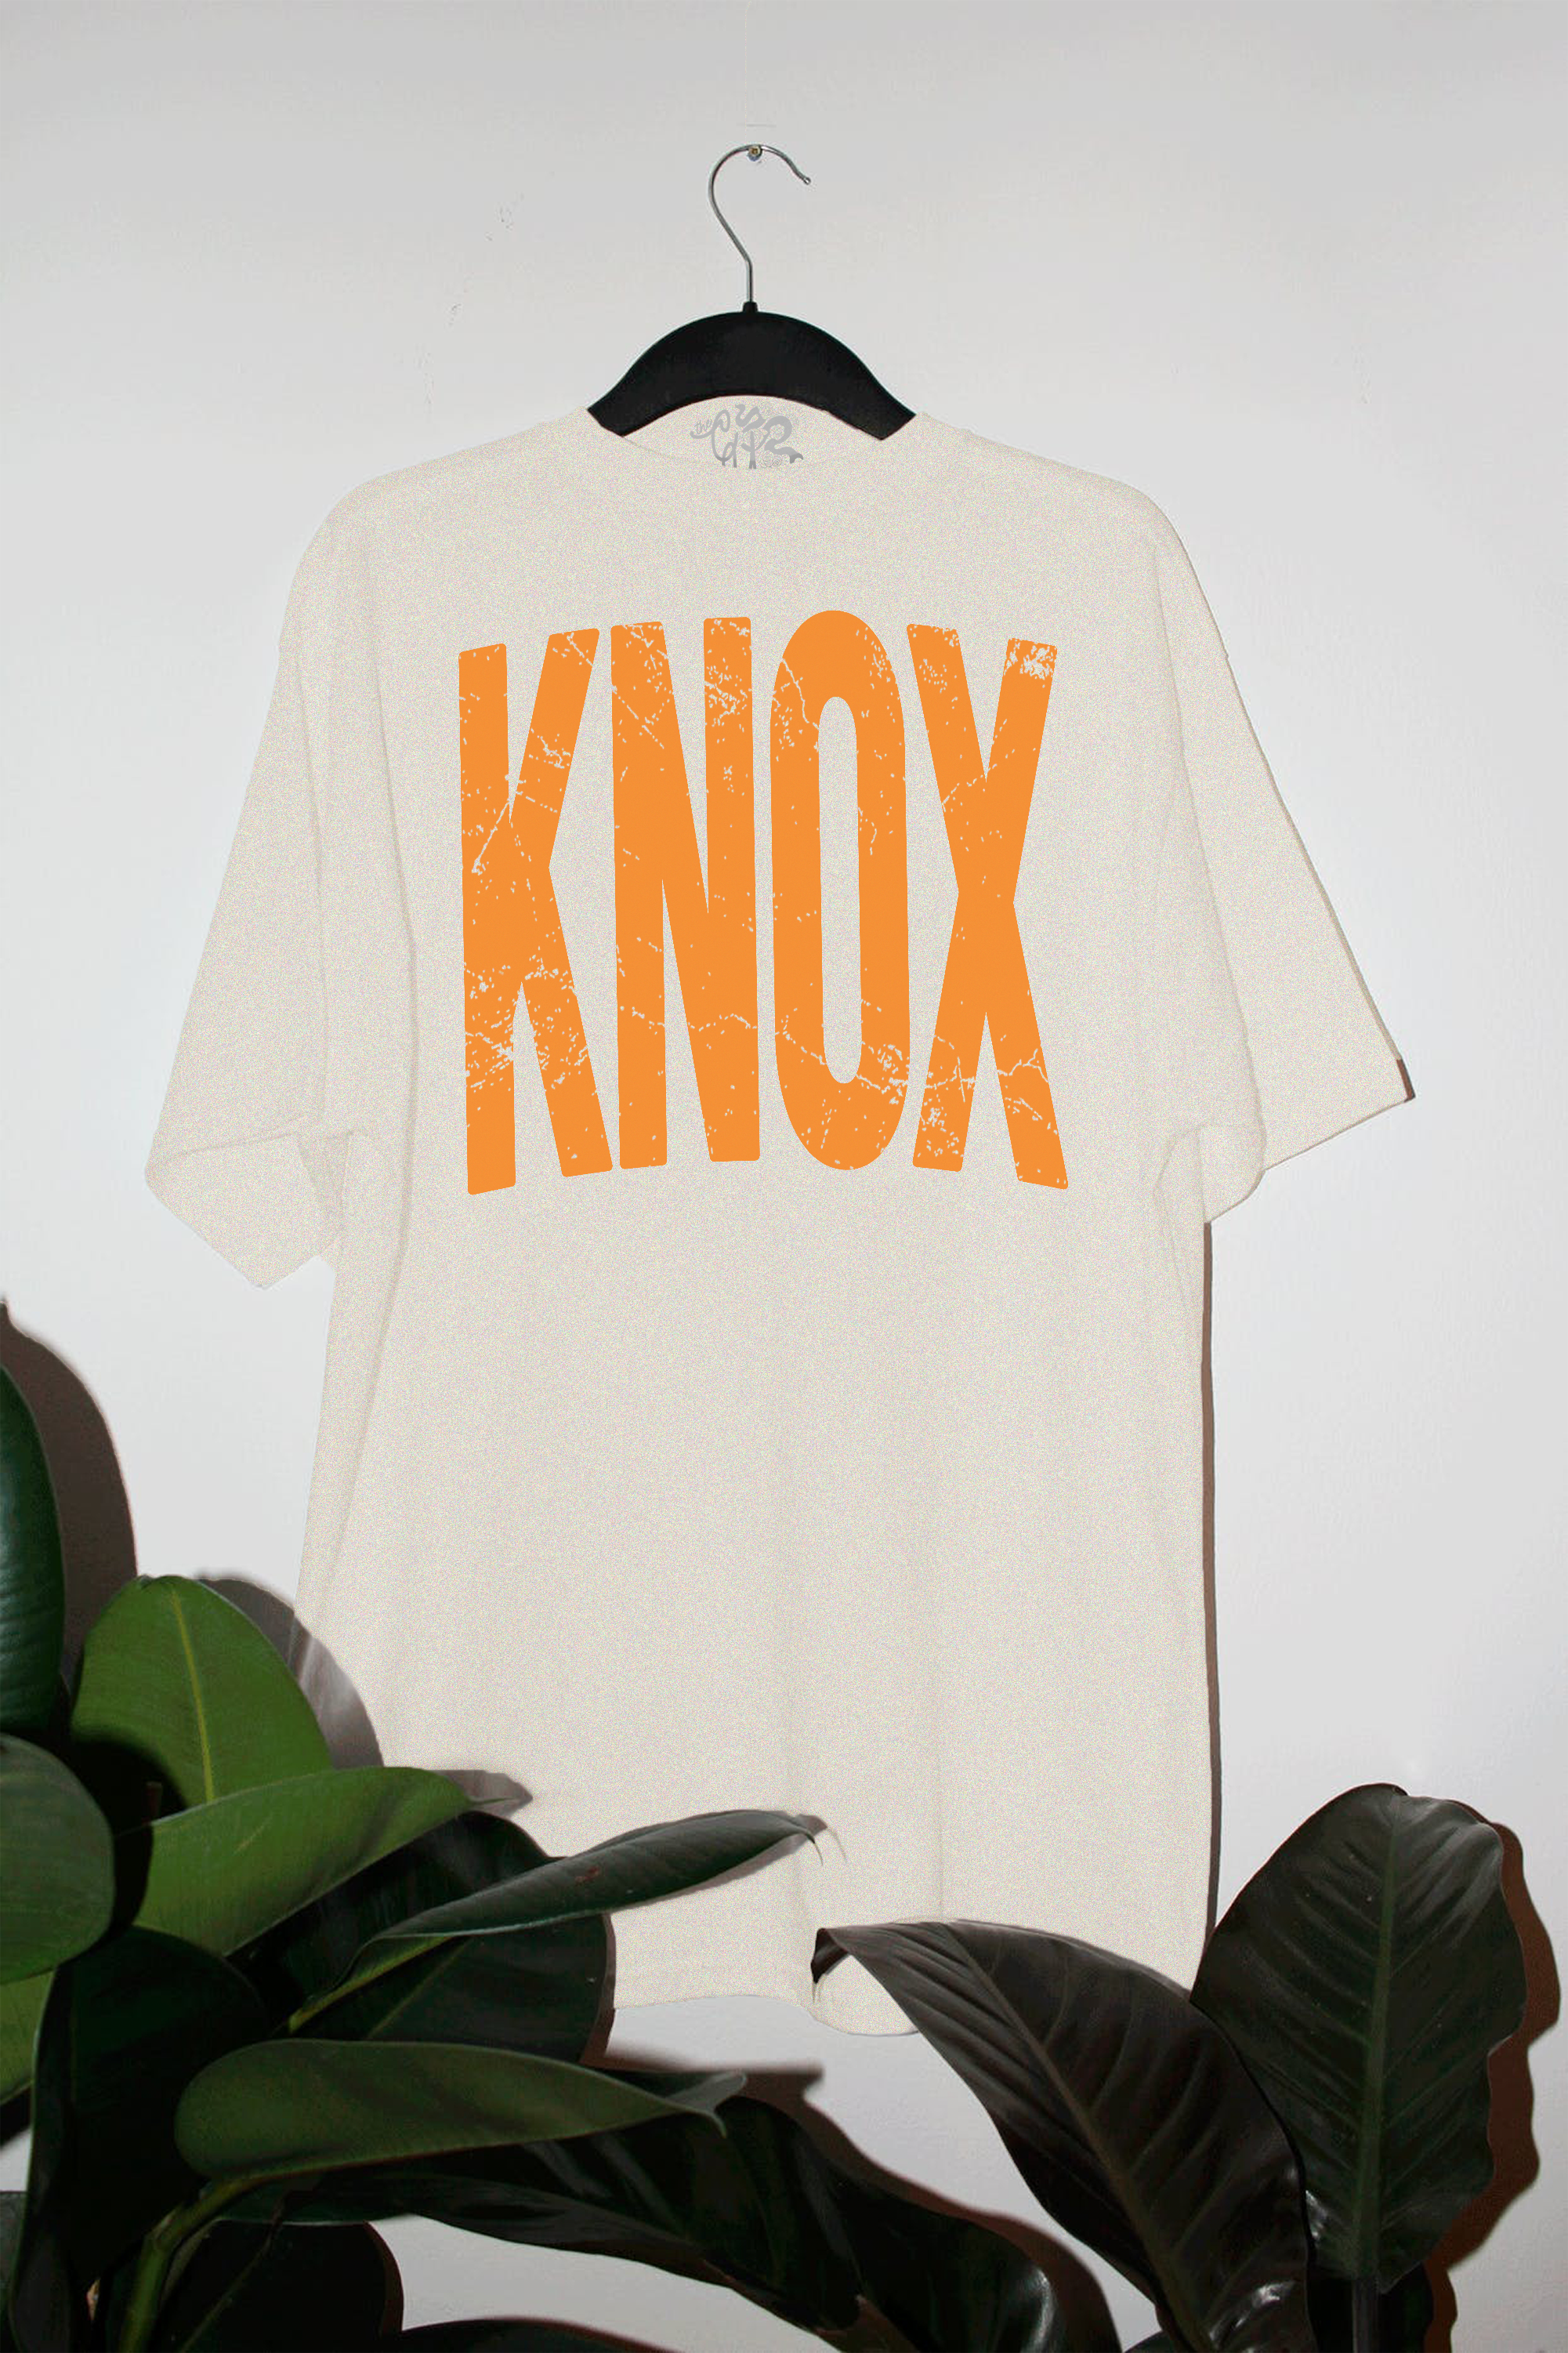 Underground Original Design: Knoxville, Tennessee Oversized T-Shirt